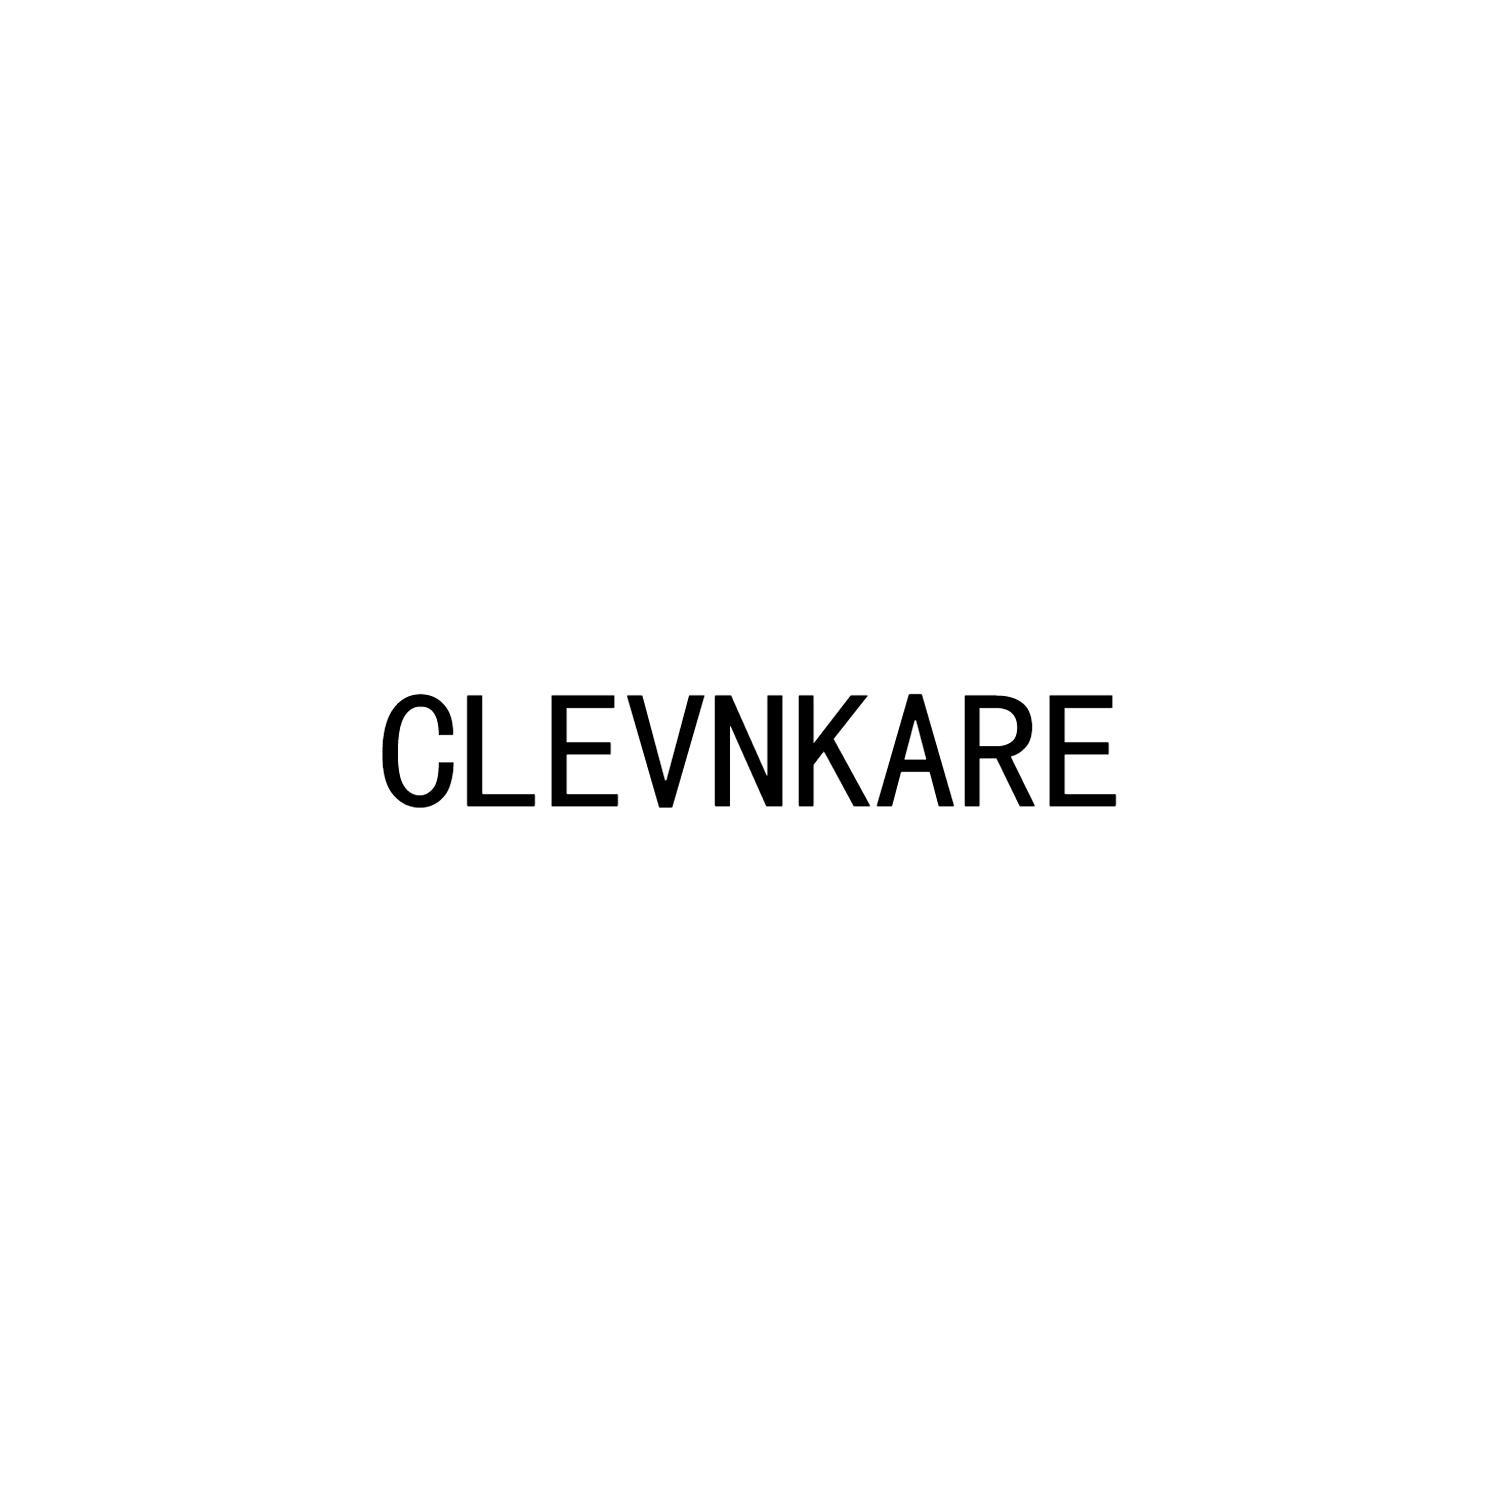 20类-家具CLEVNKARE商标转让